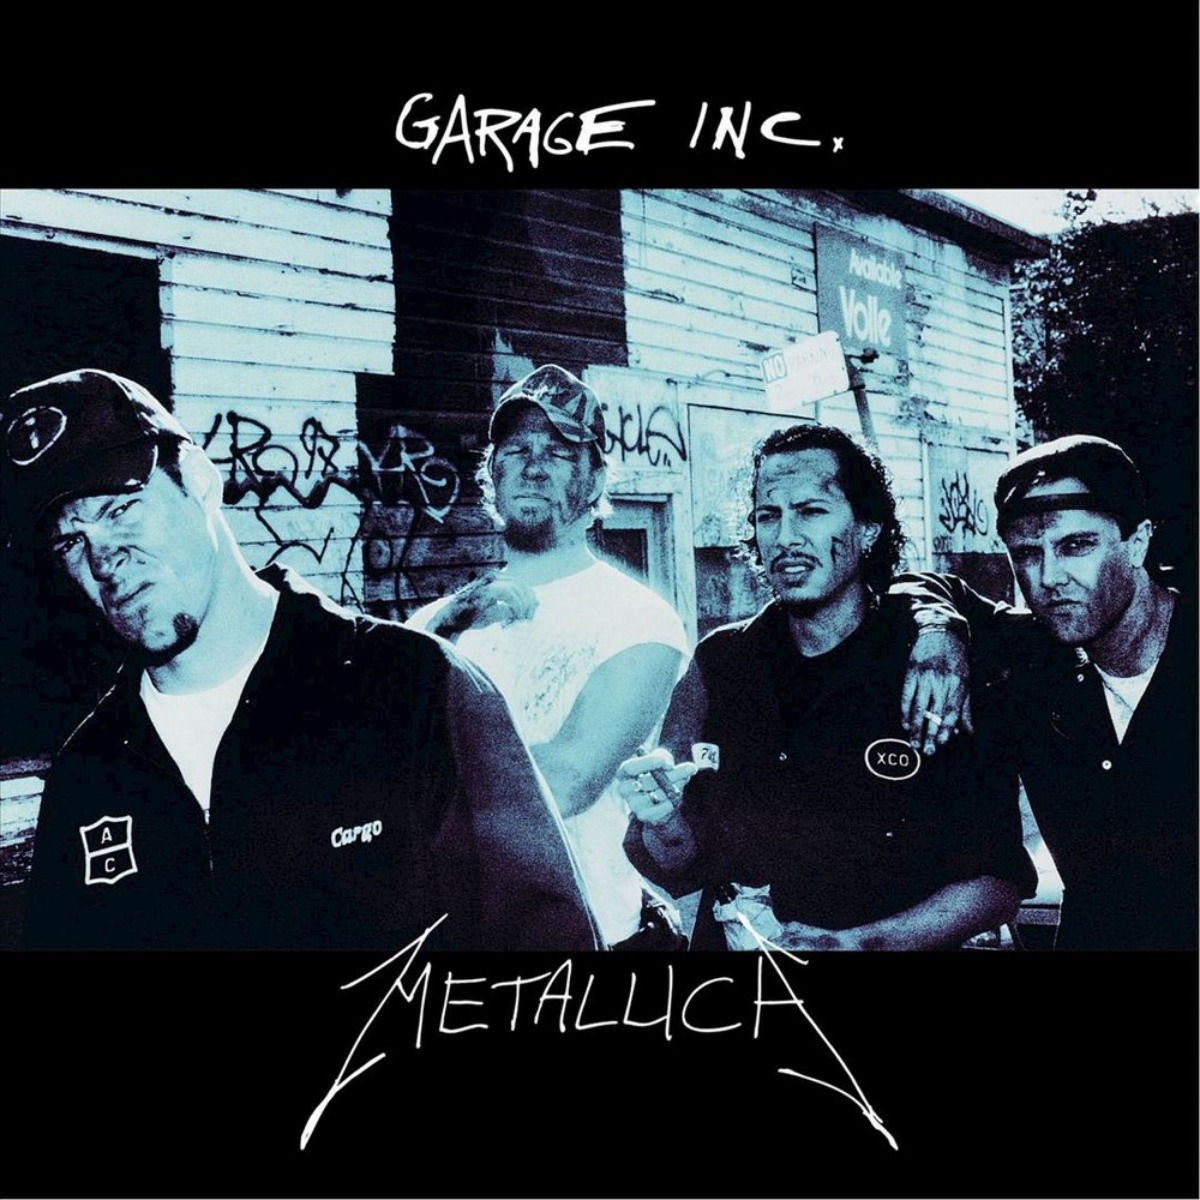 Cover of Metallica's "Garage Inc.